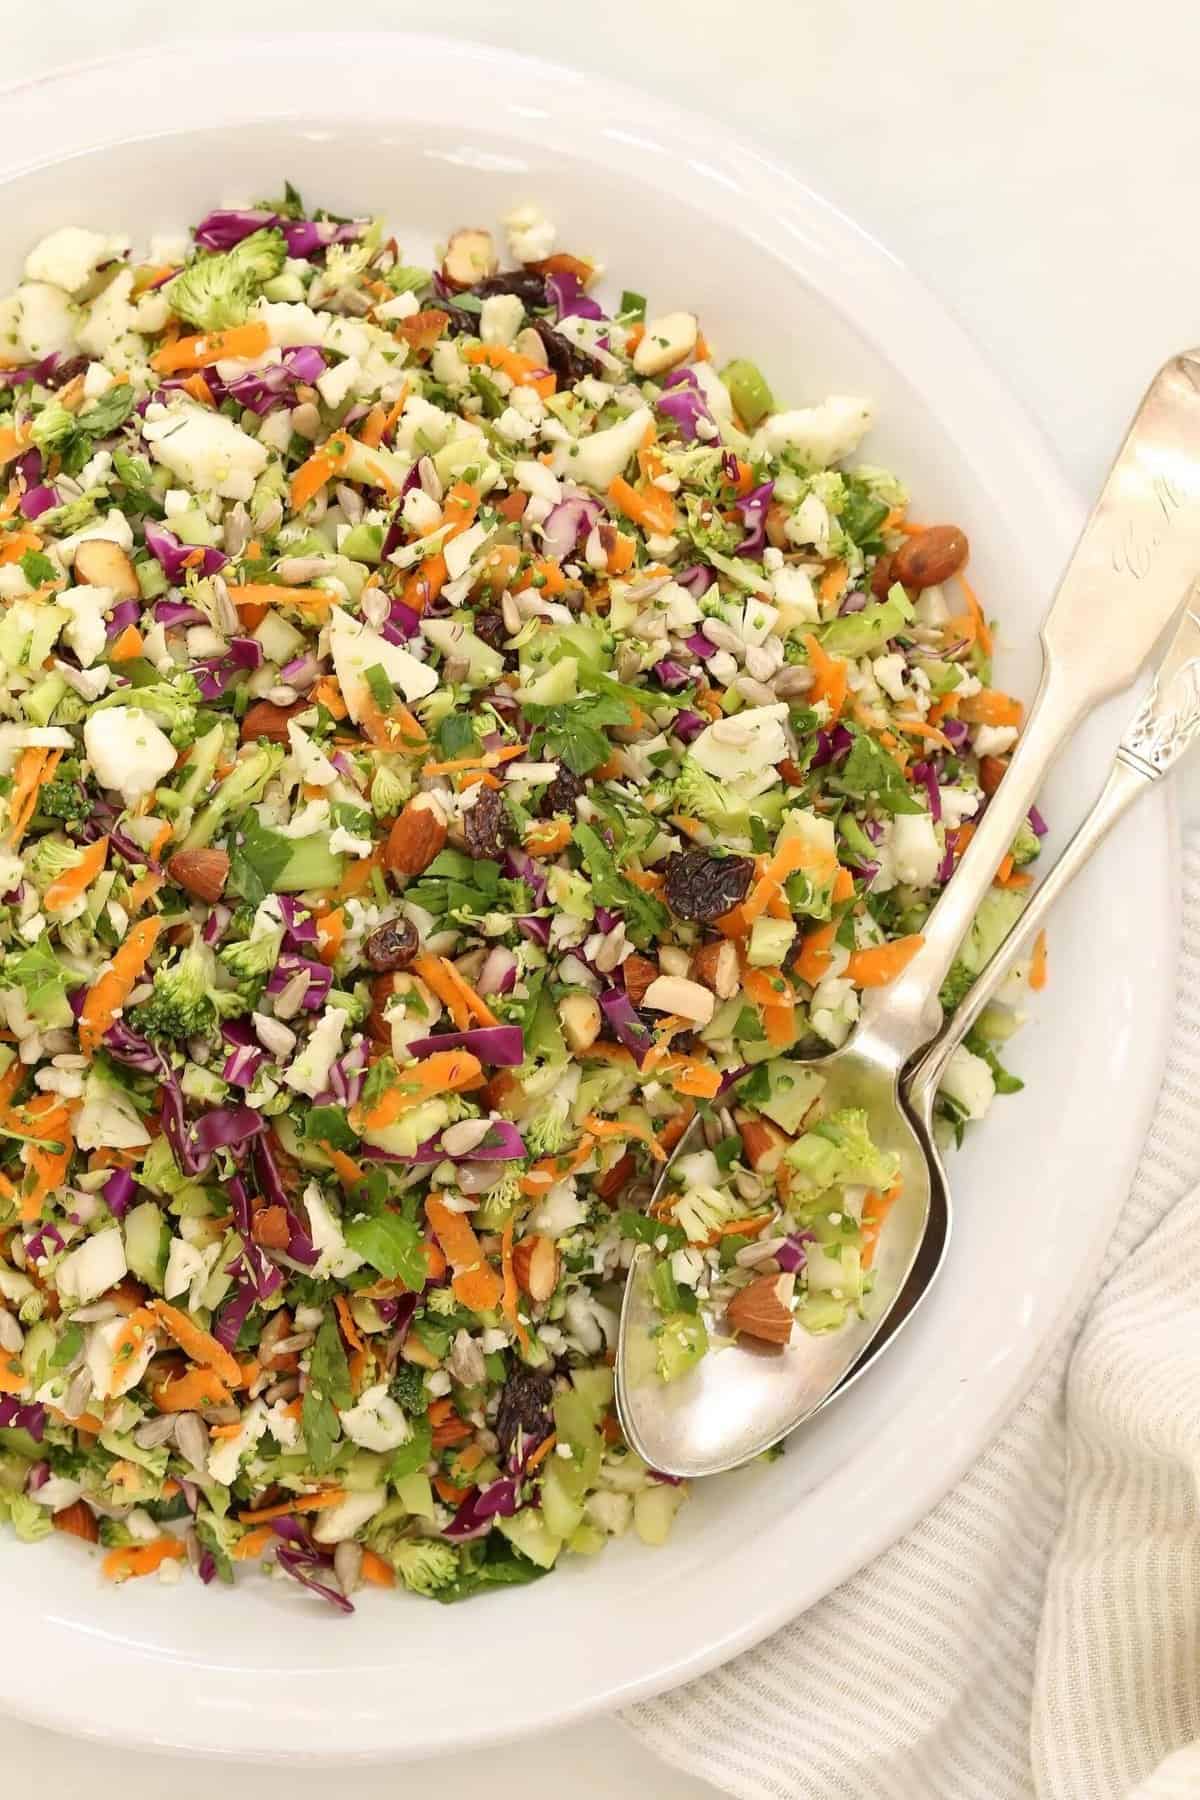 https://www.theharvestkitchen.com/wp-content/uploads/2021/05/detox-salad-healthy-scaled.jpg